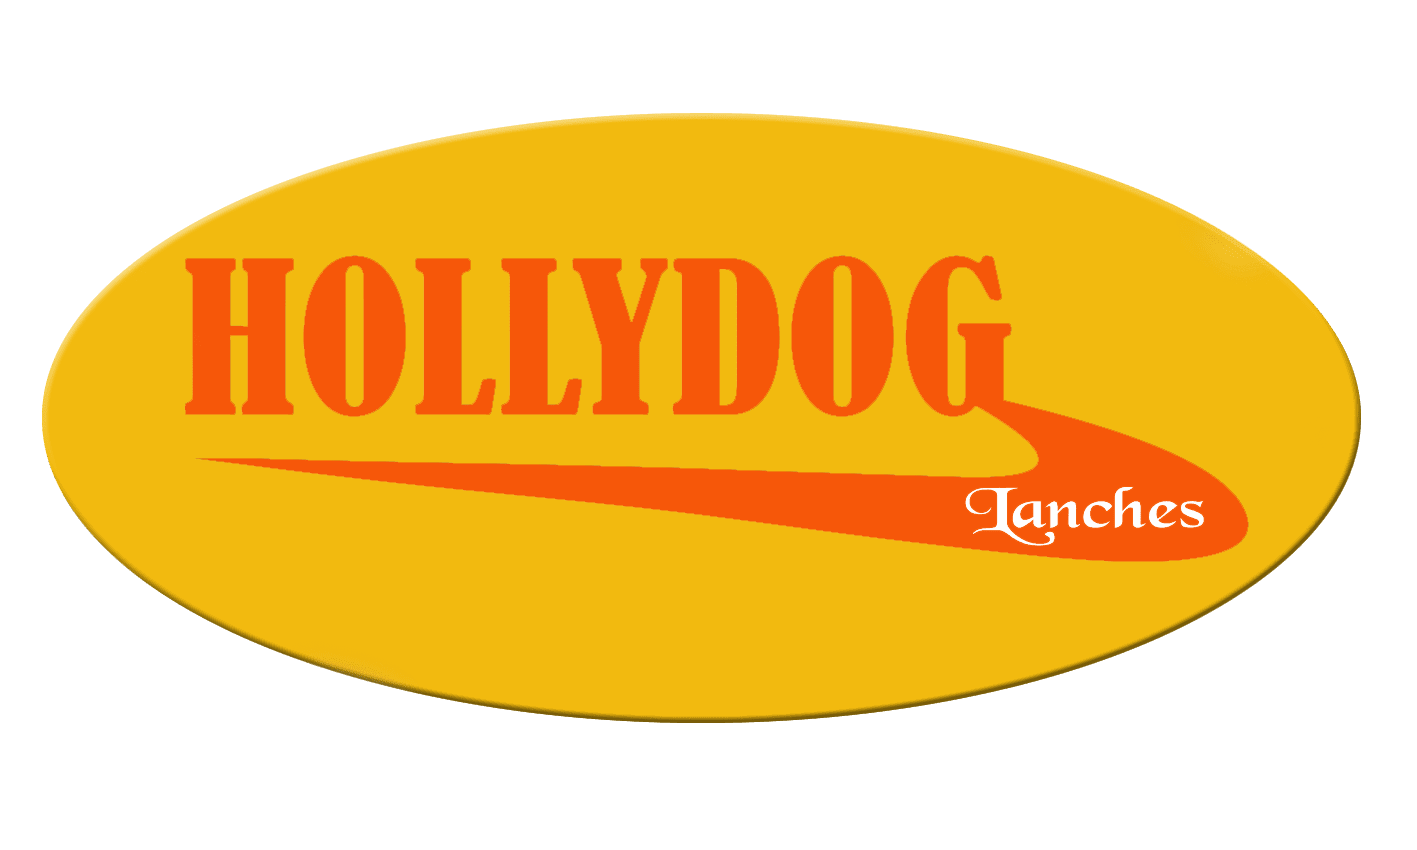 Hollydog Lanches